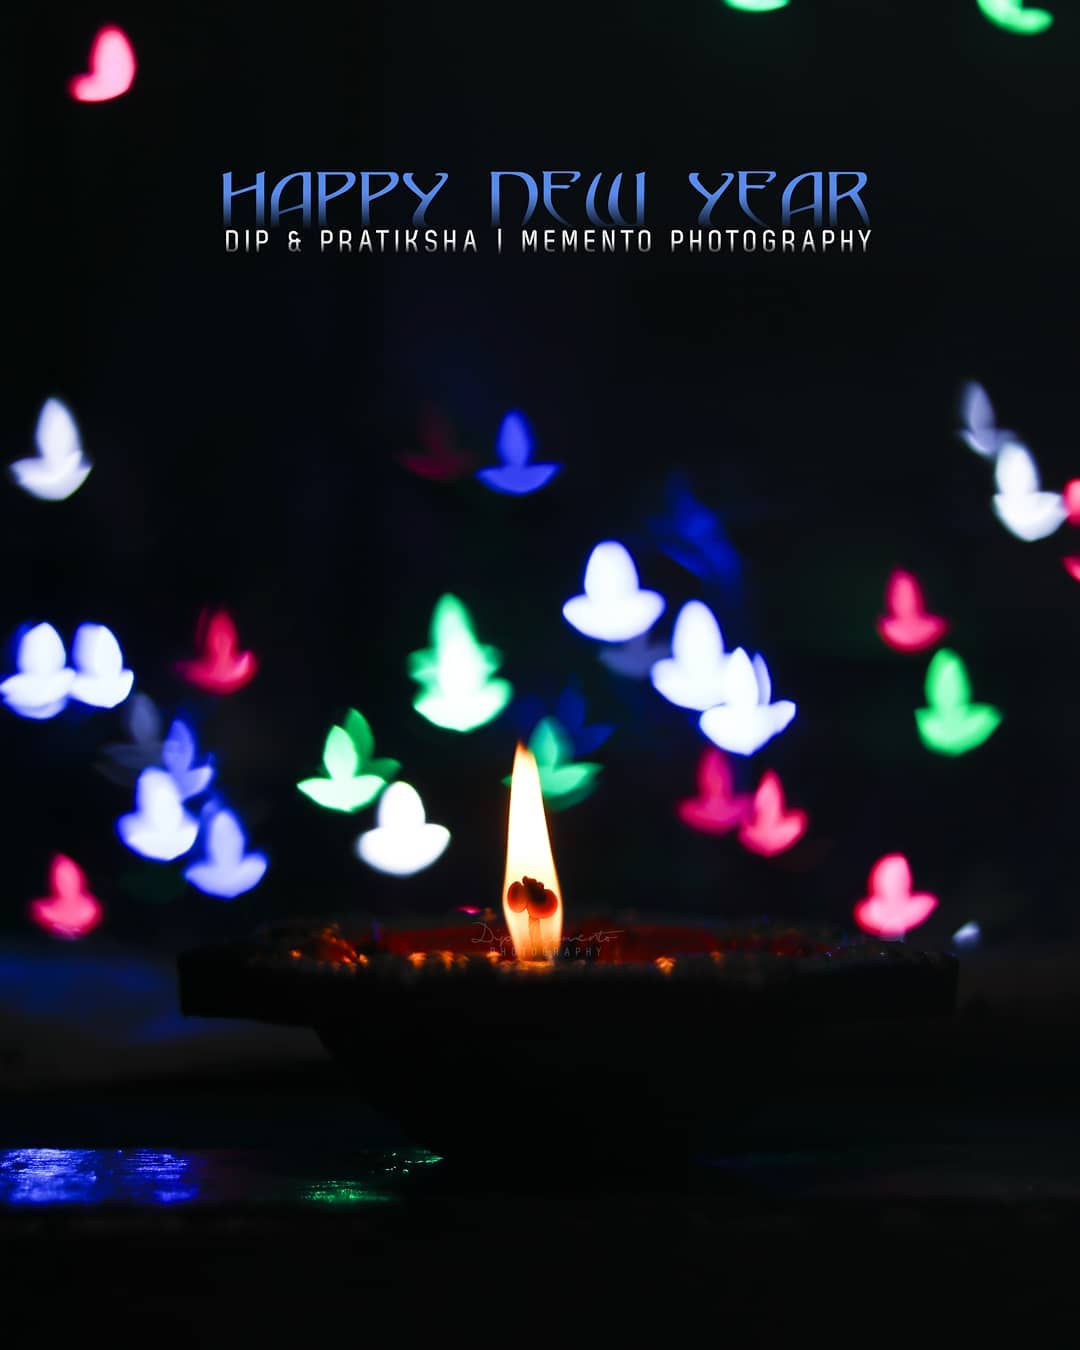 Happy New Year.

#newyear #newyearvibes #happiness #prosperity #joy #joyfull #newday #newresolutions #resolution #indianfestival #indianbigfestival #festivalofdiyas #diya #festivaloflights #festival #crackles #fireworks

@photographers.of.india @colours.of.india @dslrofficial @india_undiscovered @__indian_photography__ @photographers_of_india @hindustan.pictures @the.anonymous.photographers @india_everyday @canon_photos @indian.hobbygraphy @india_gram @adobe @streetphotofactory @phodus_competition @dpeginsta @igindiaview @igvisualcaptures @indian_clickers_ @indianshutterbugs @indiashutterbugs @galiphotography_ @photofieteam @delhiwale @travel.real.india @monochromeindia @naturephotography.india @photofieteam @cloud_ig @indiaview @delhihai @india.clicks @official_photography_hub @trellingdelhi @agameoftones @photographers__of__india @lonelyplanetindia @imperial.india @click.ig @dslr_photographers @talent_wall @jmu_talent_destination @natgeocreative @creativeimagemagazineo @iop_delhi @photo_pond @talent_of_india @talent_wall